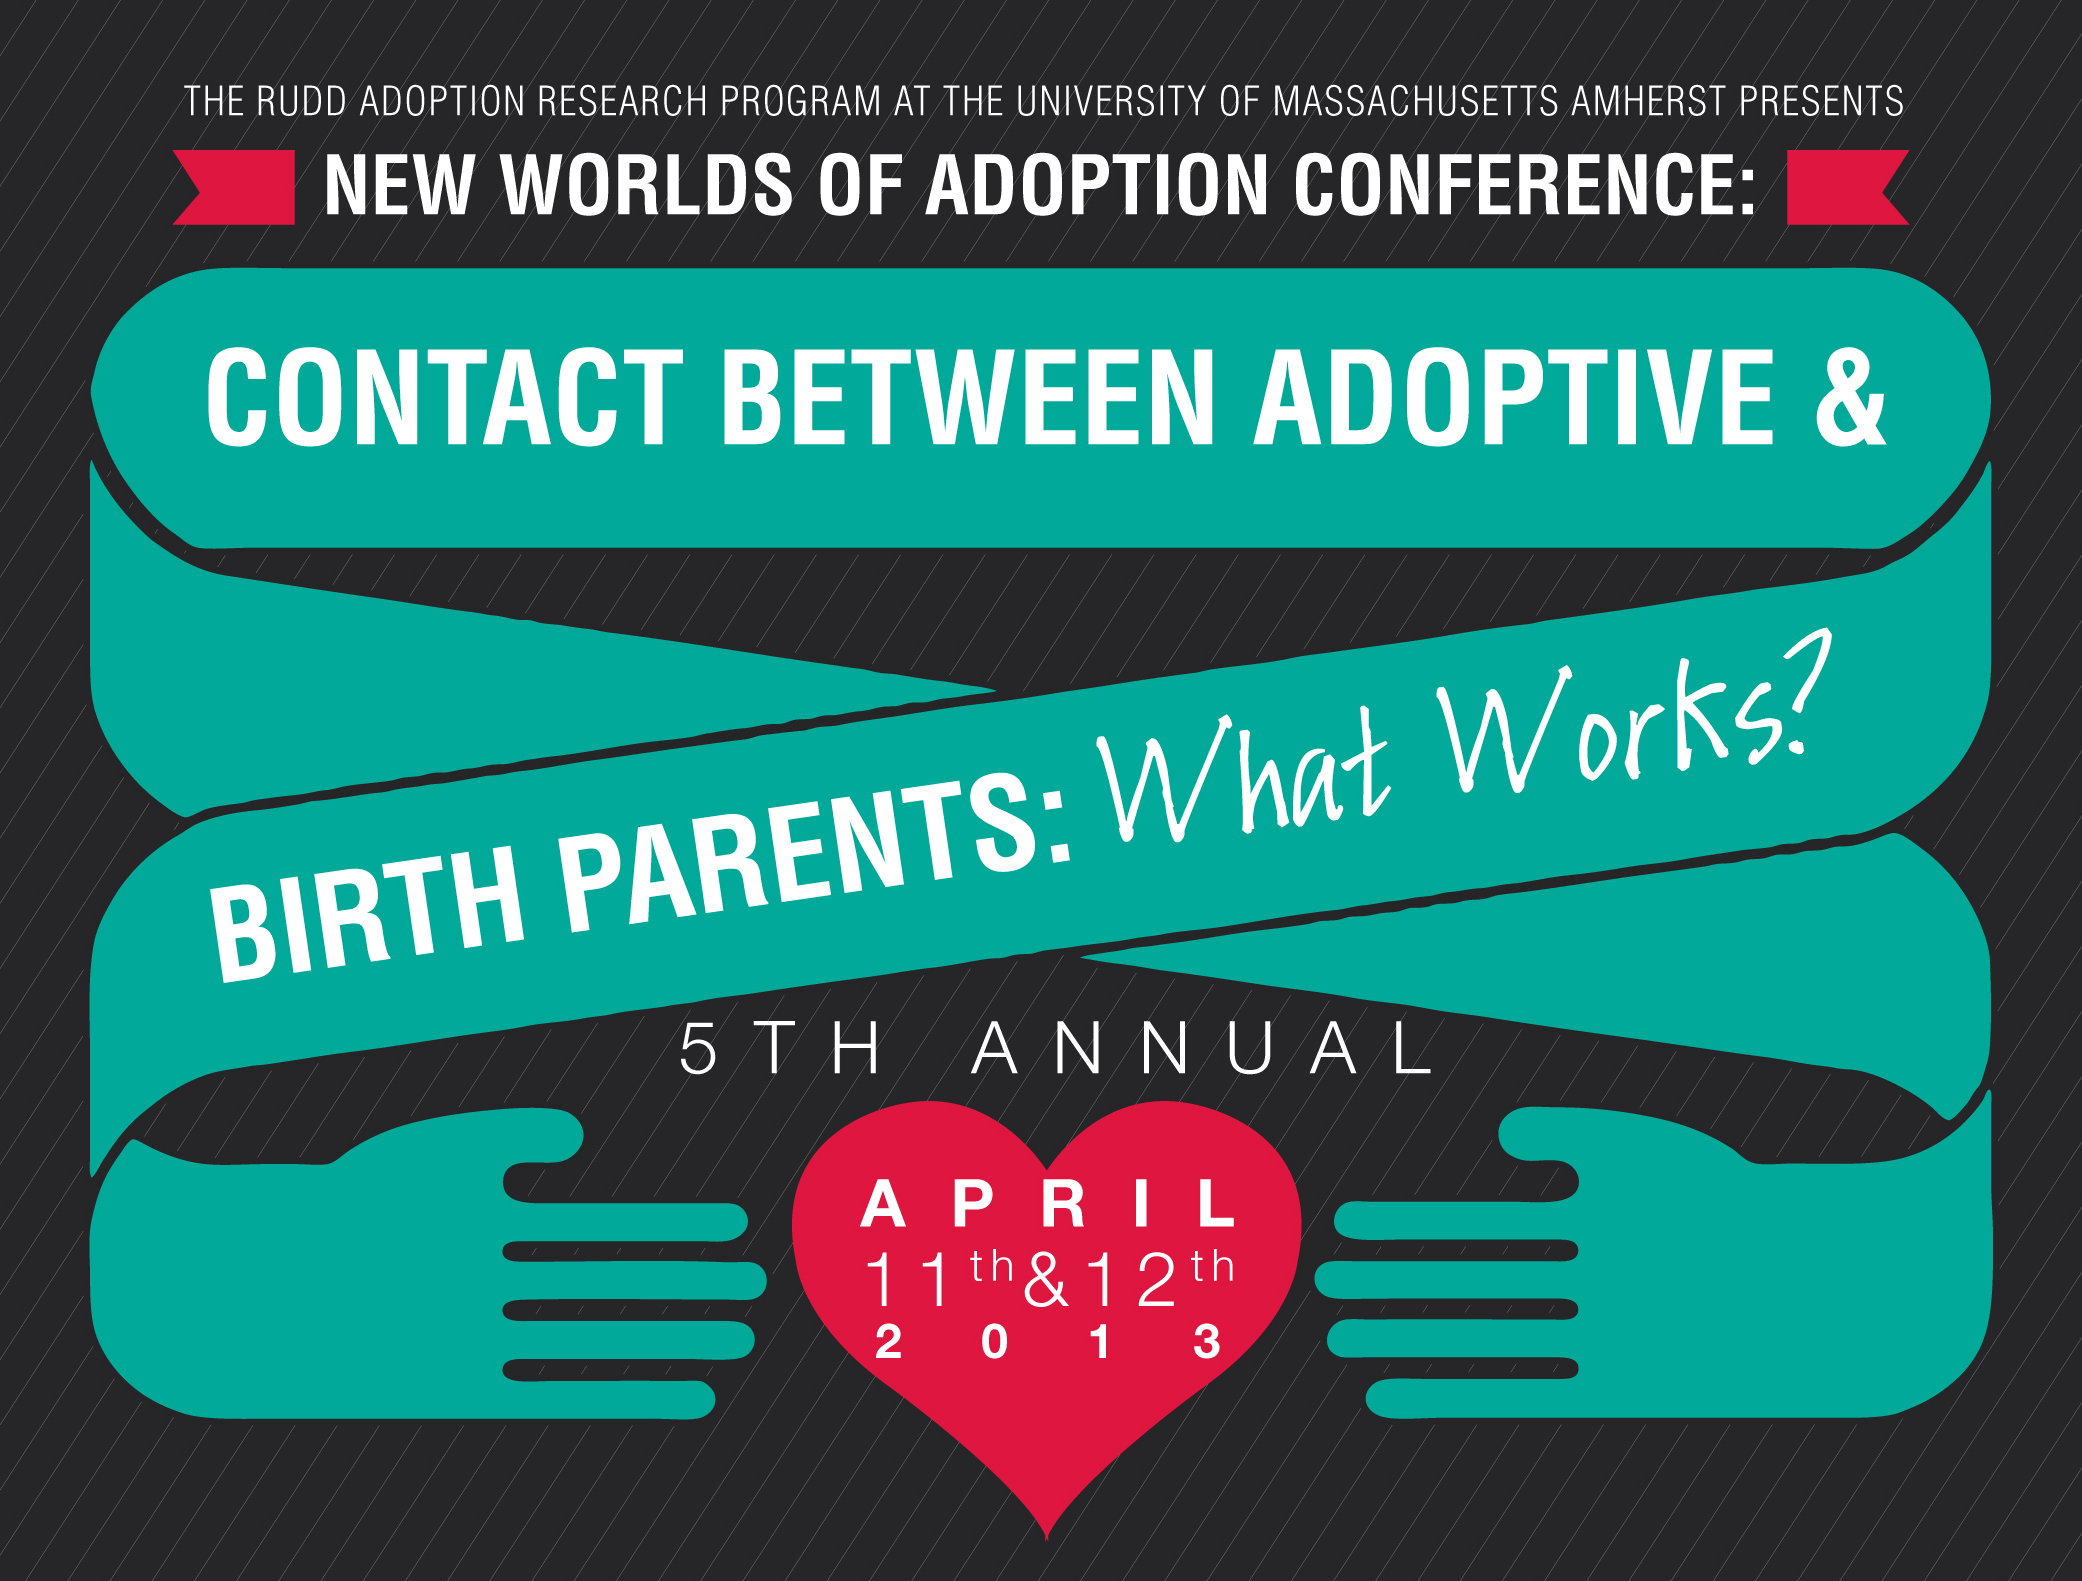 2013 Rudd Adoption Research Program Annual Conference